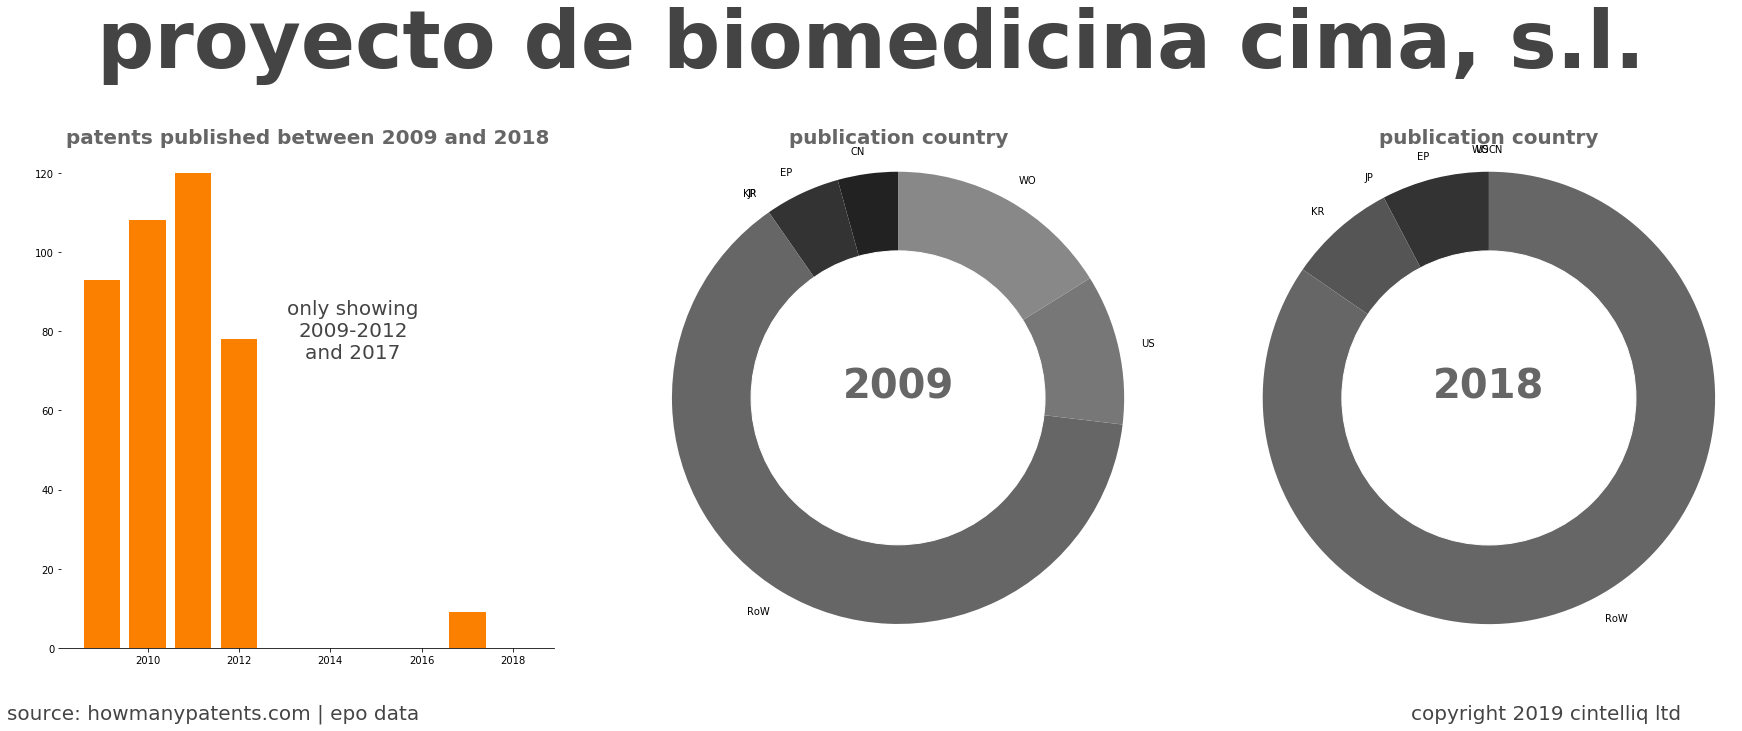 summary of patents for Proyecto De Biomedicina Cima, S.L.